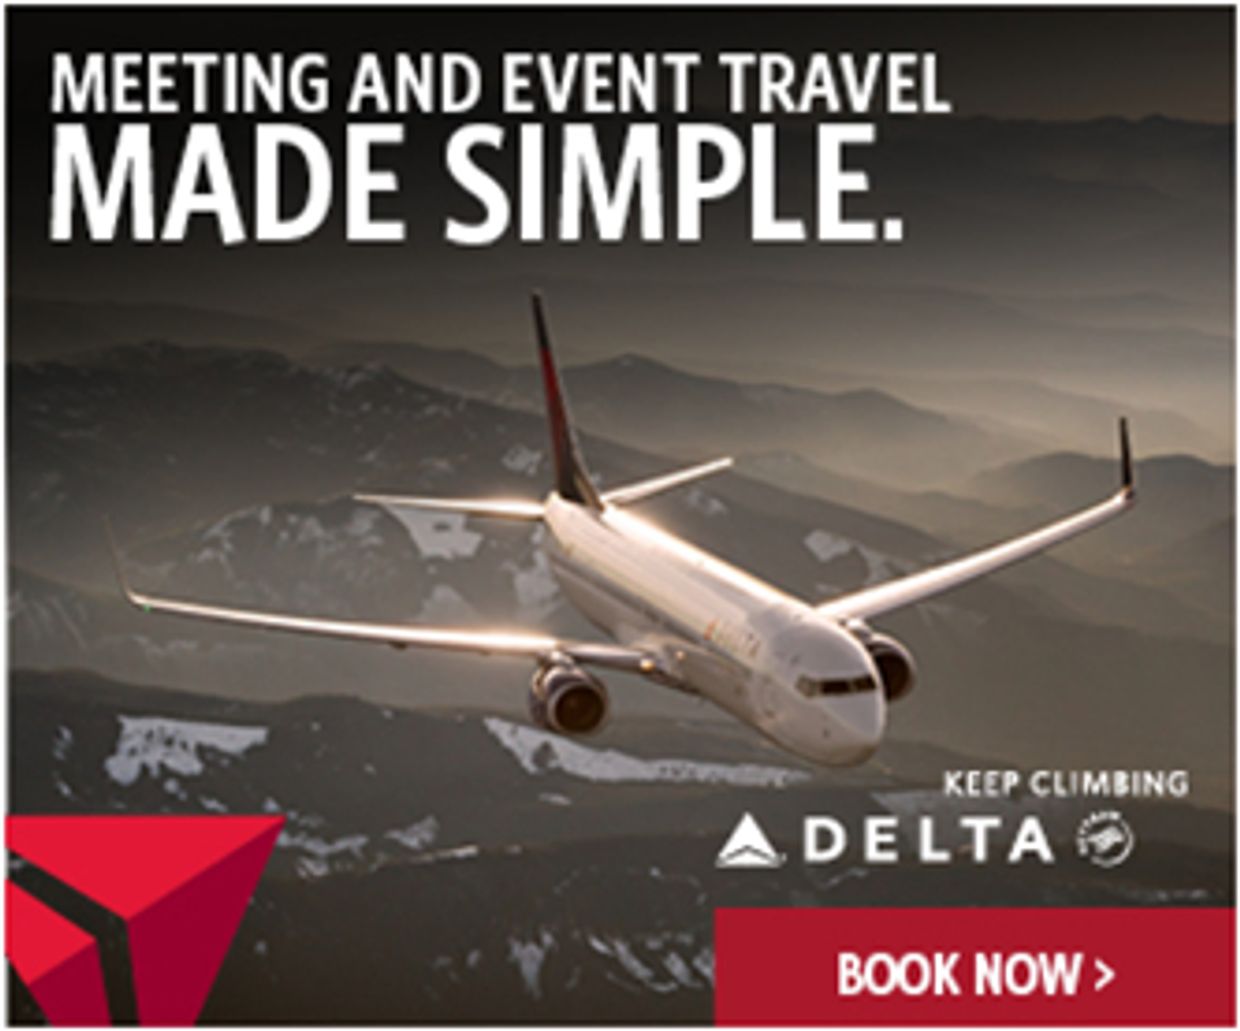 Delta Airlines Discount